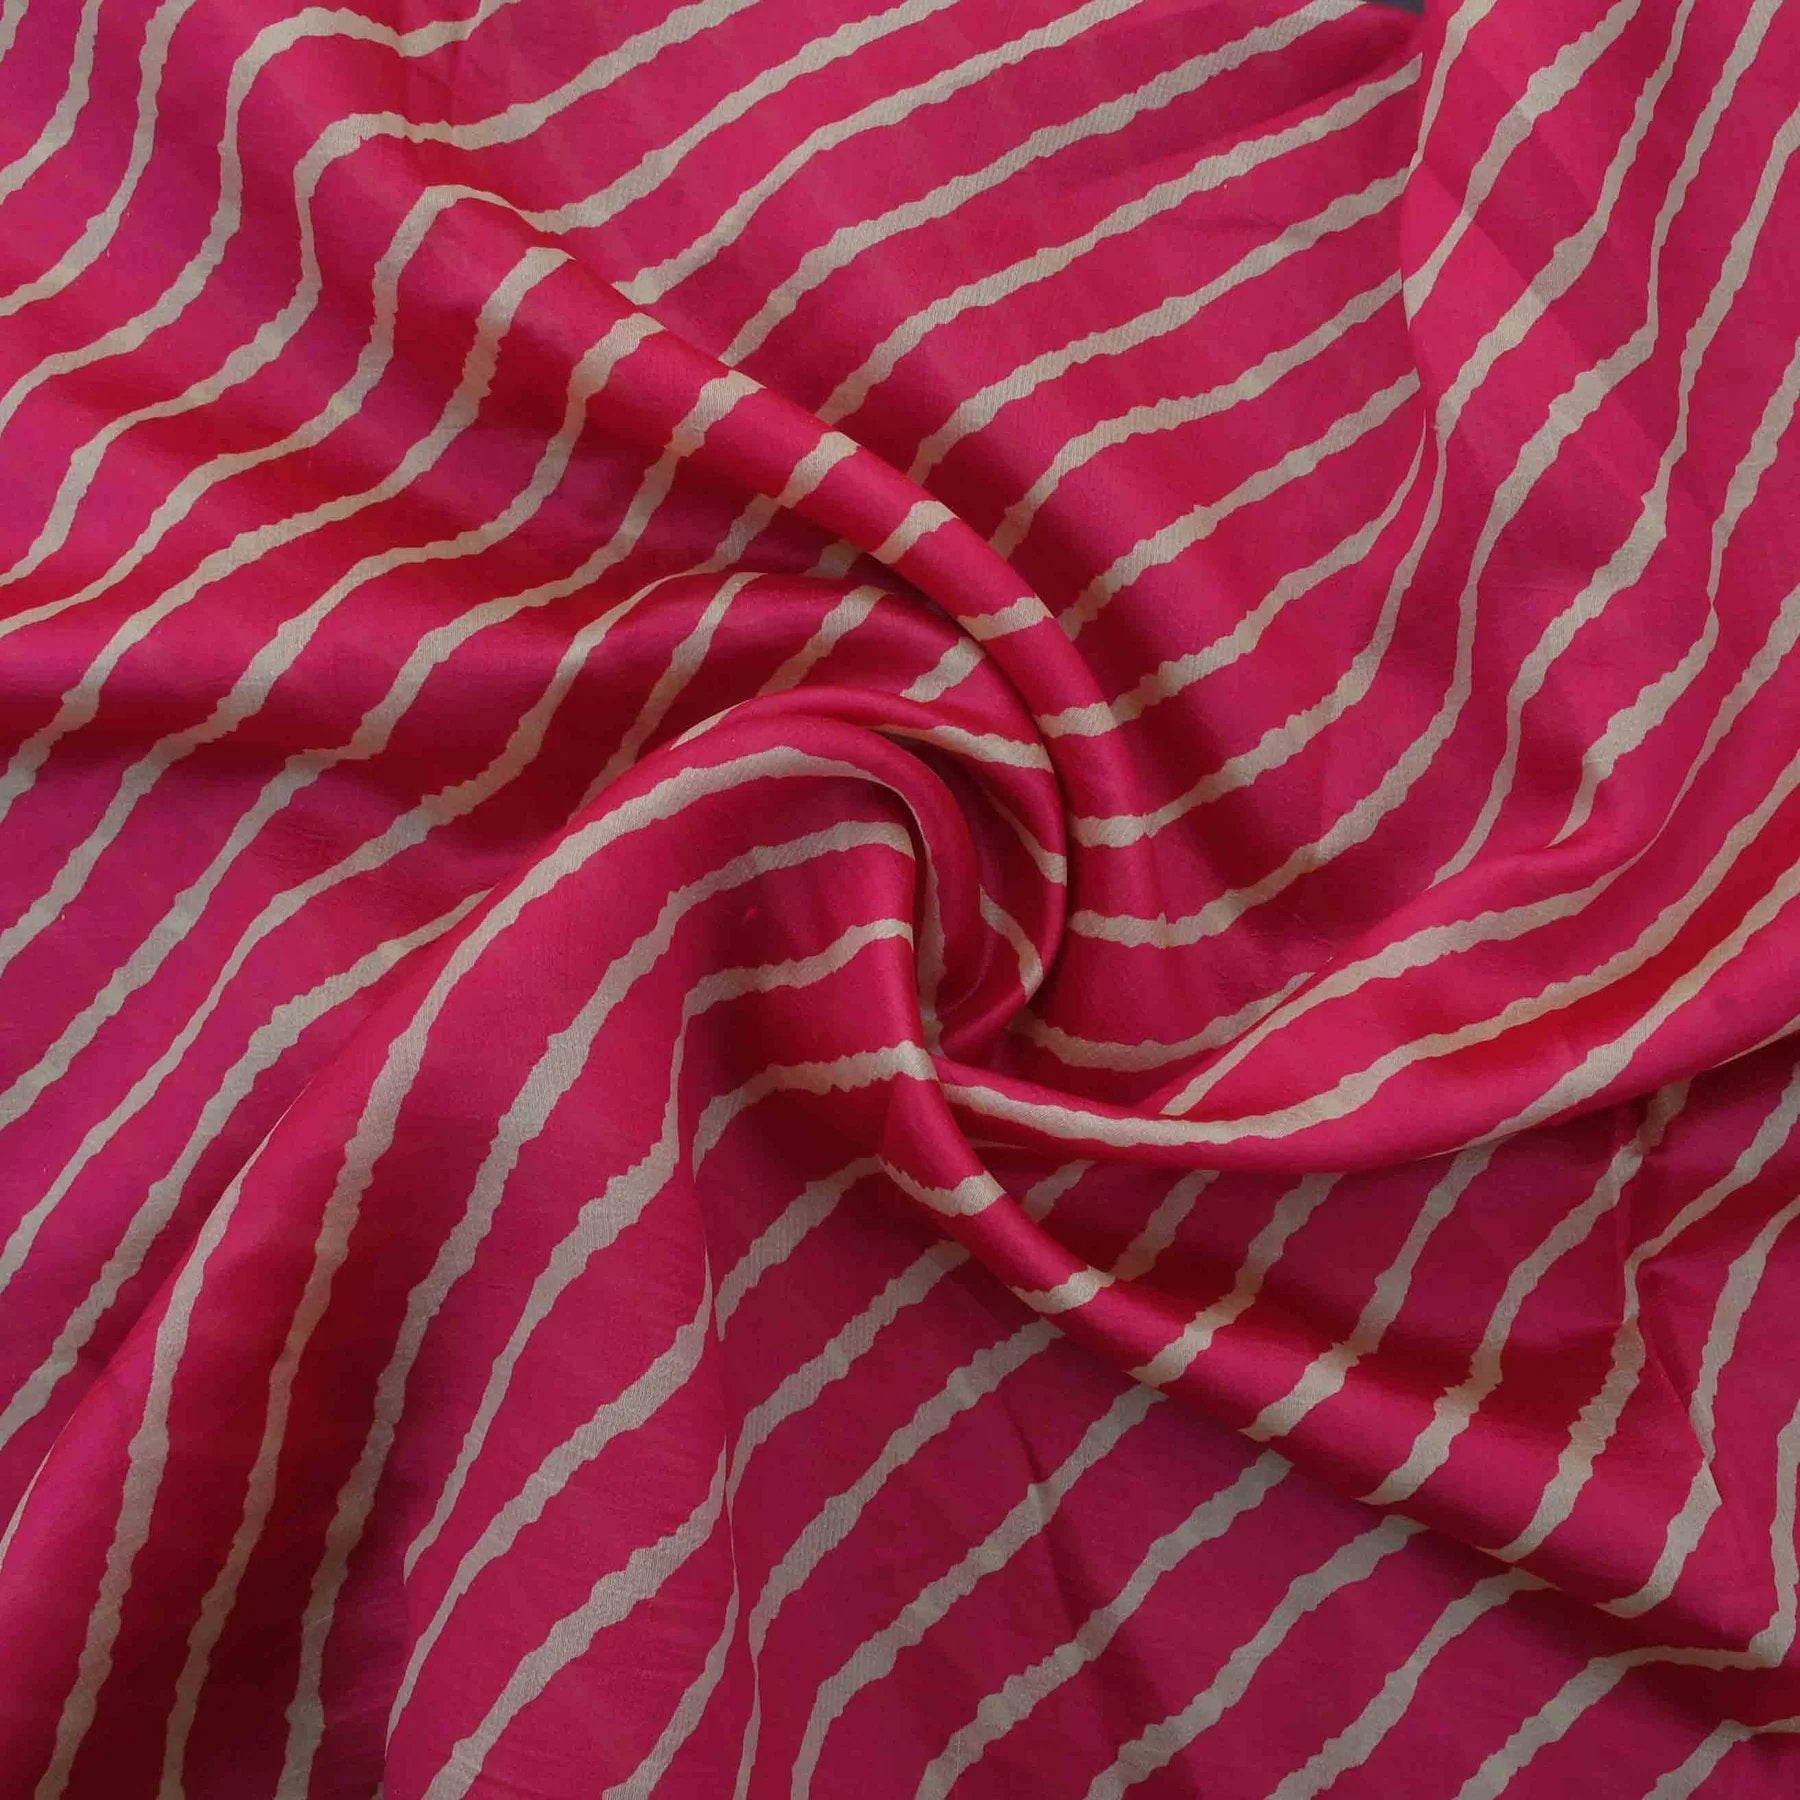 Buy rani traditional indian printed silk fabric with peacock banarasi  border online in India - Shobhini.